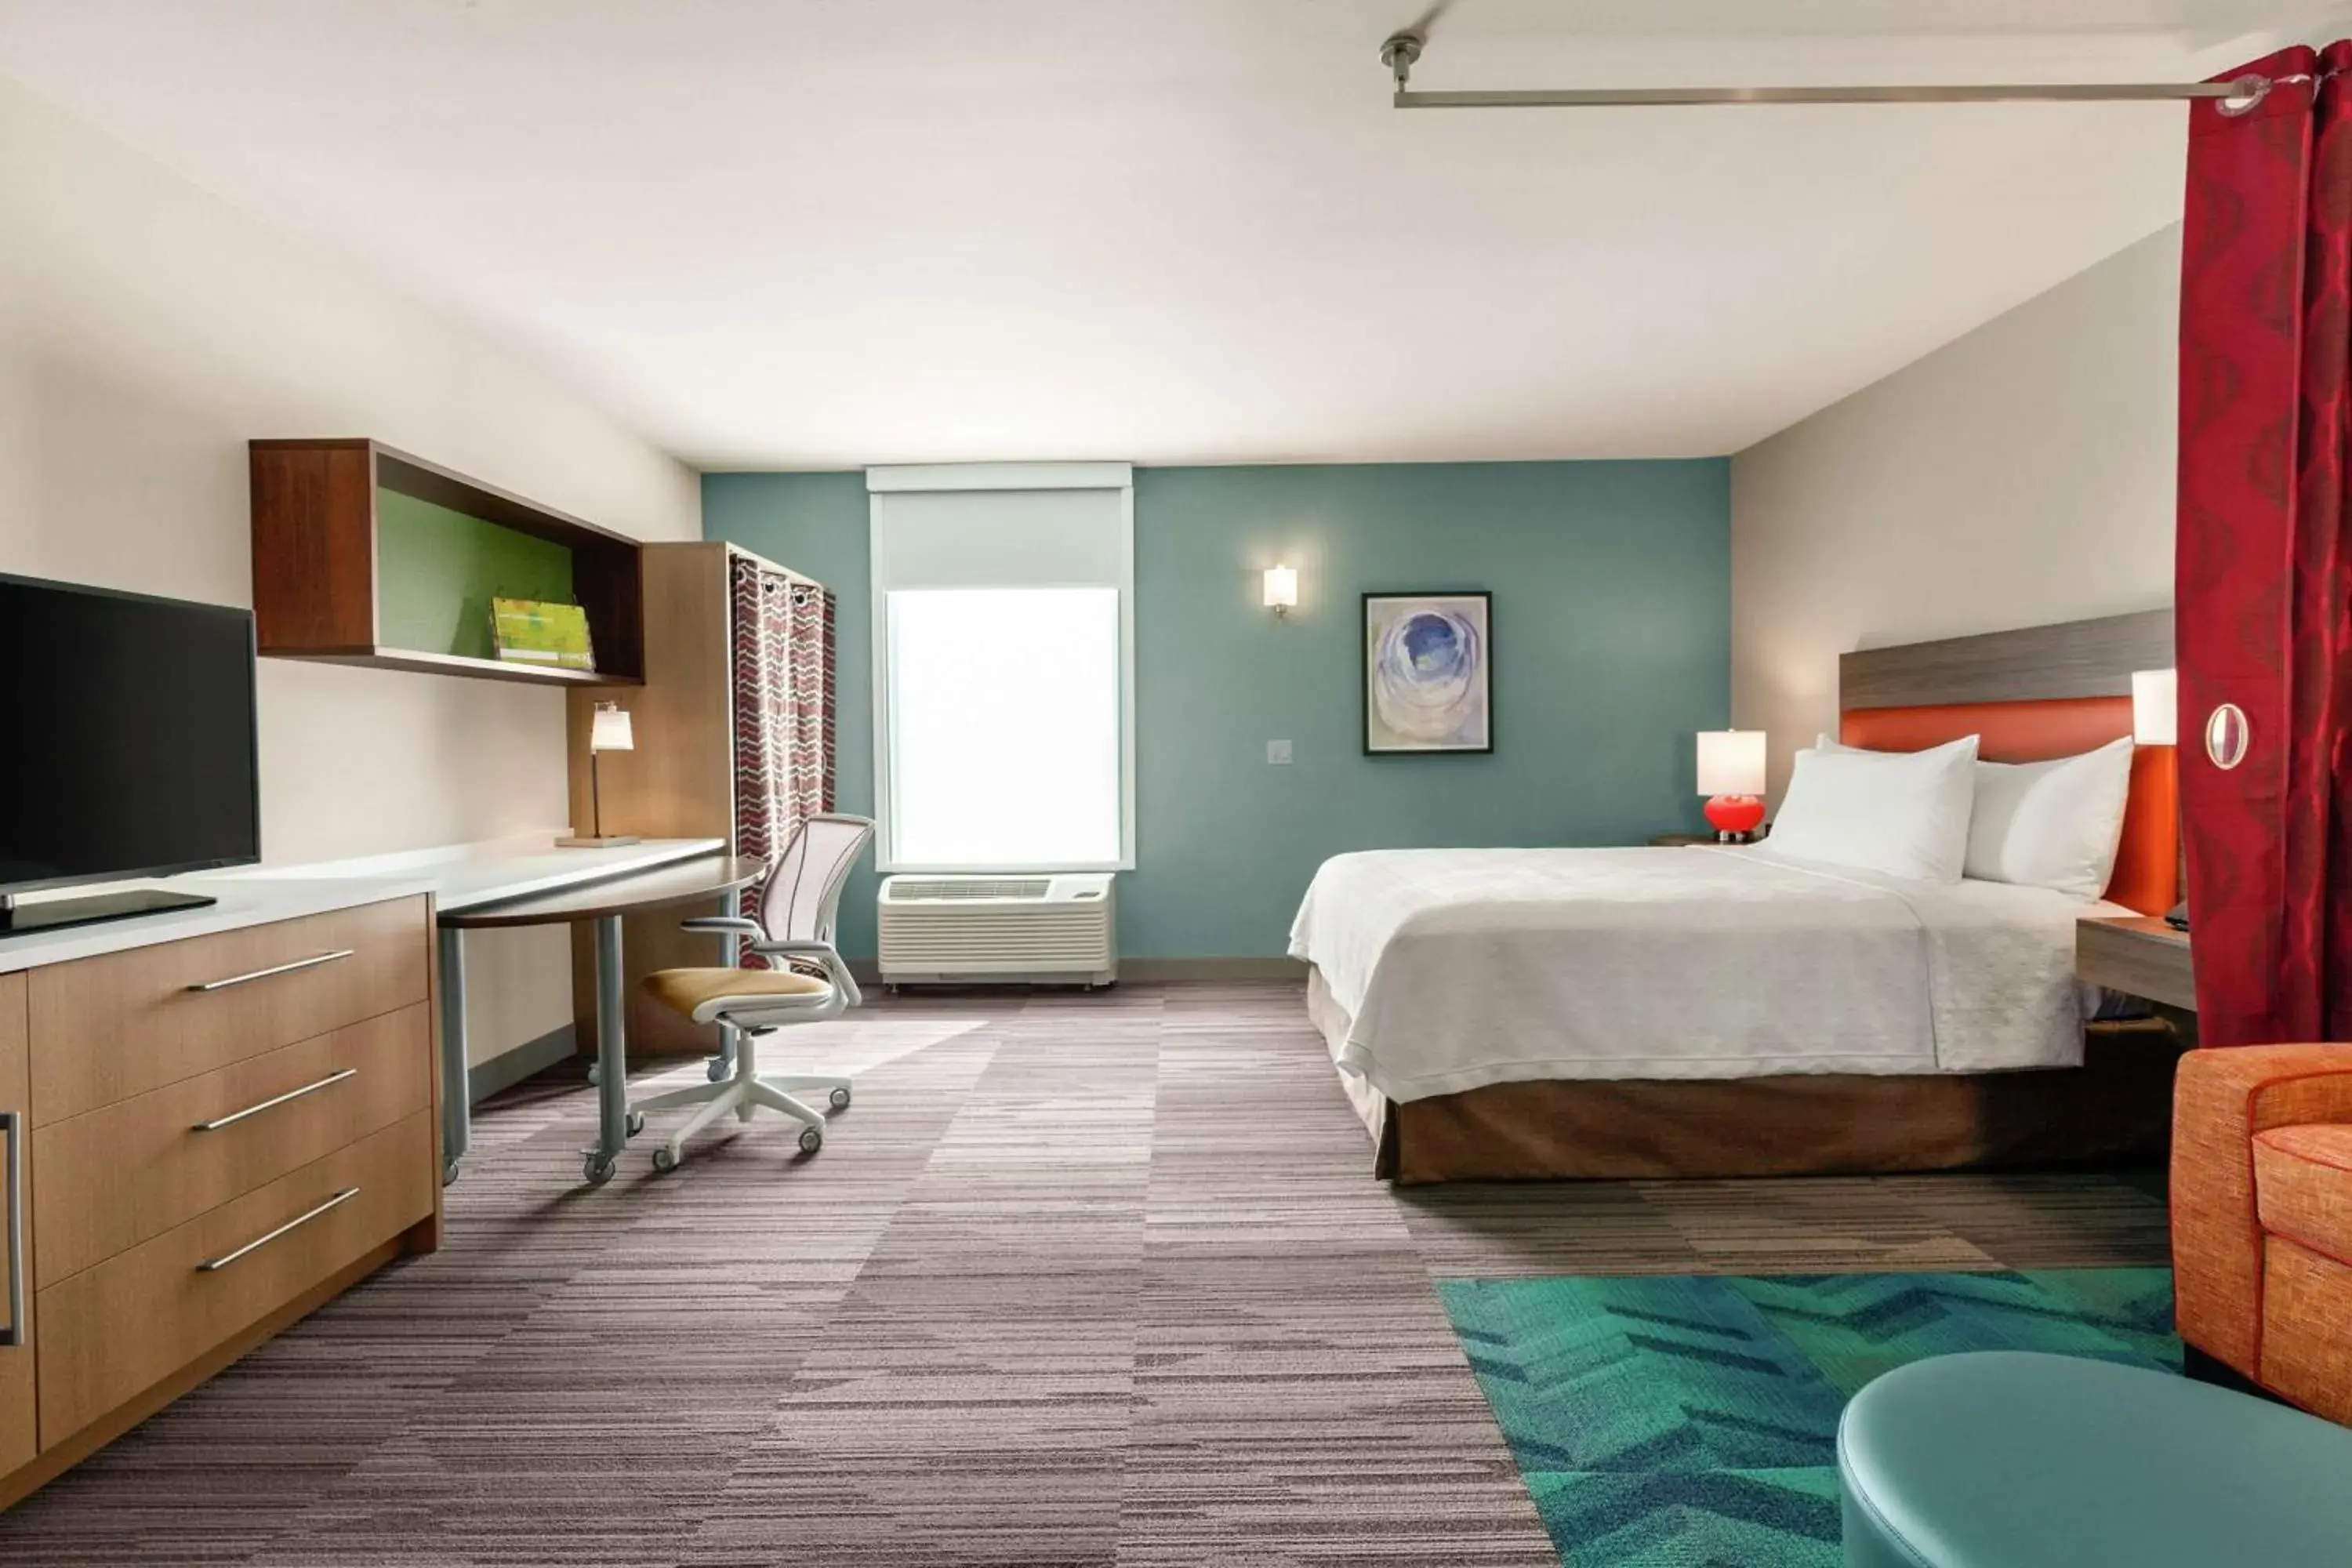 Bedroom, TV/Entertainment Center in Home2 Suites by Hilton Sarasota - Bradenton Airport, FL